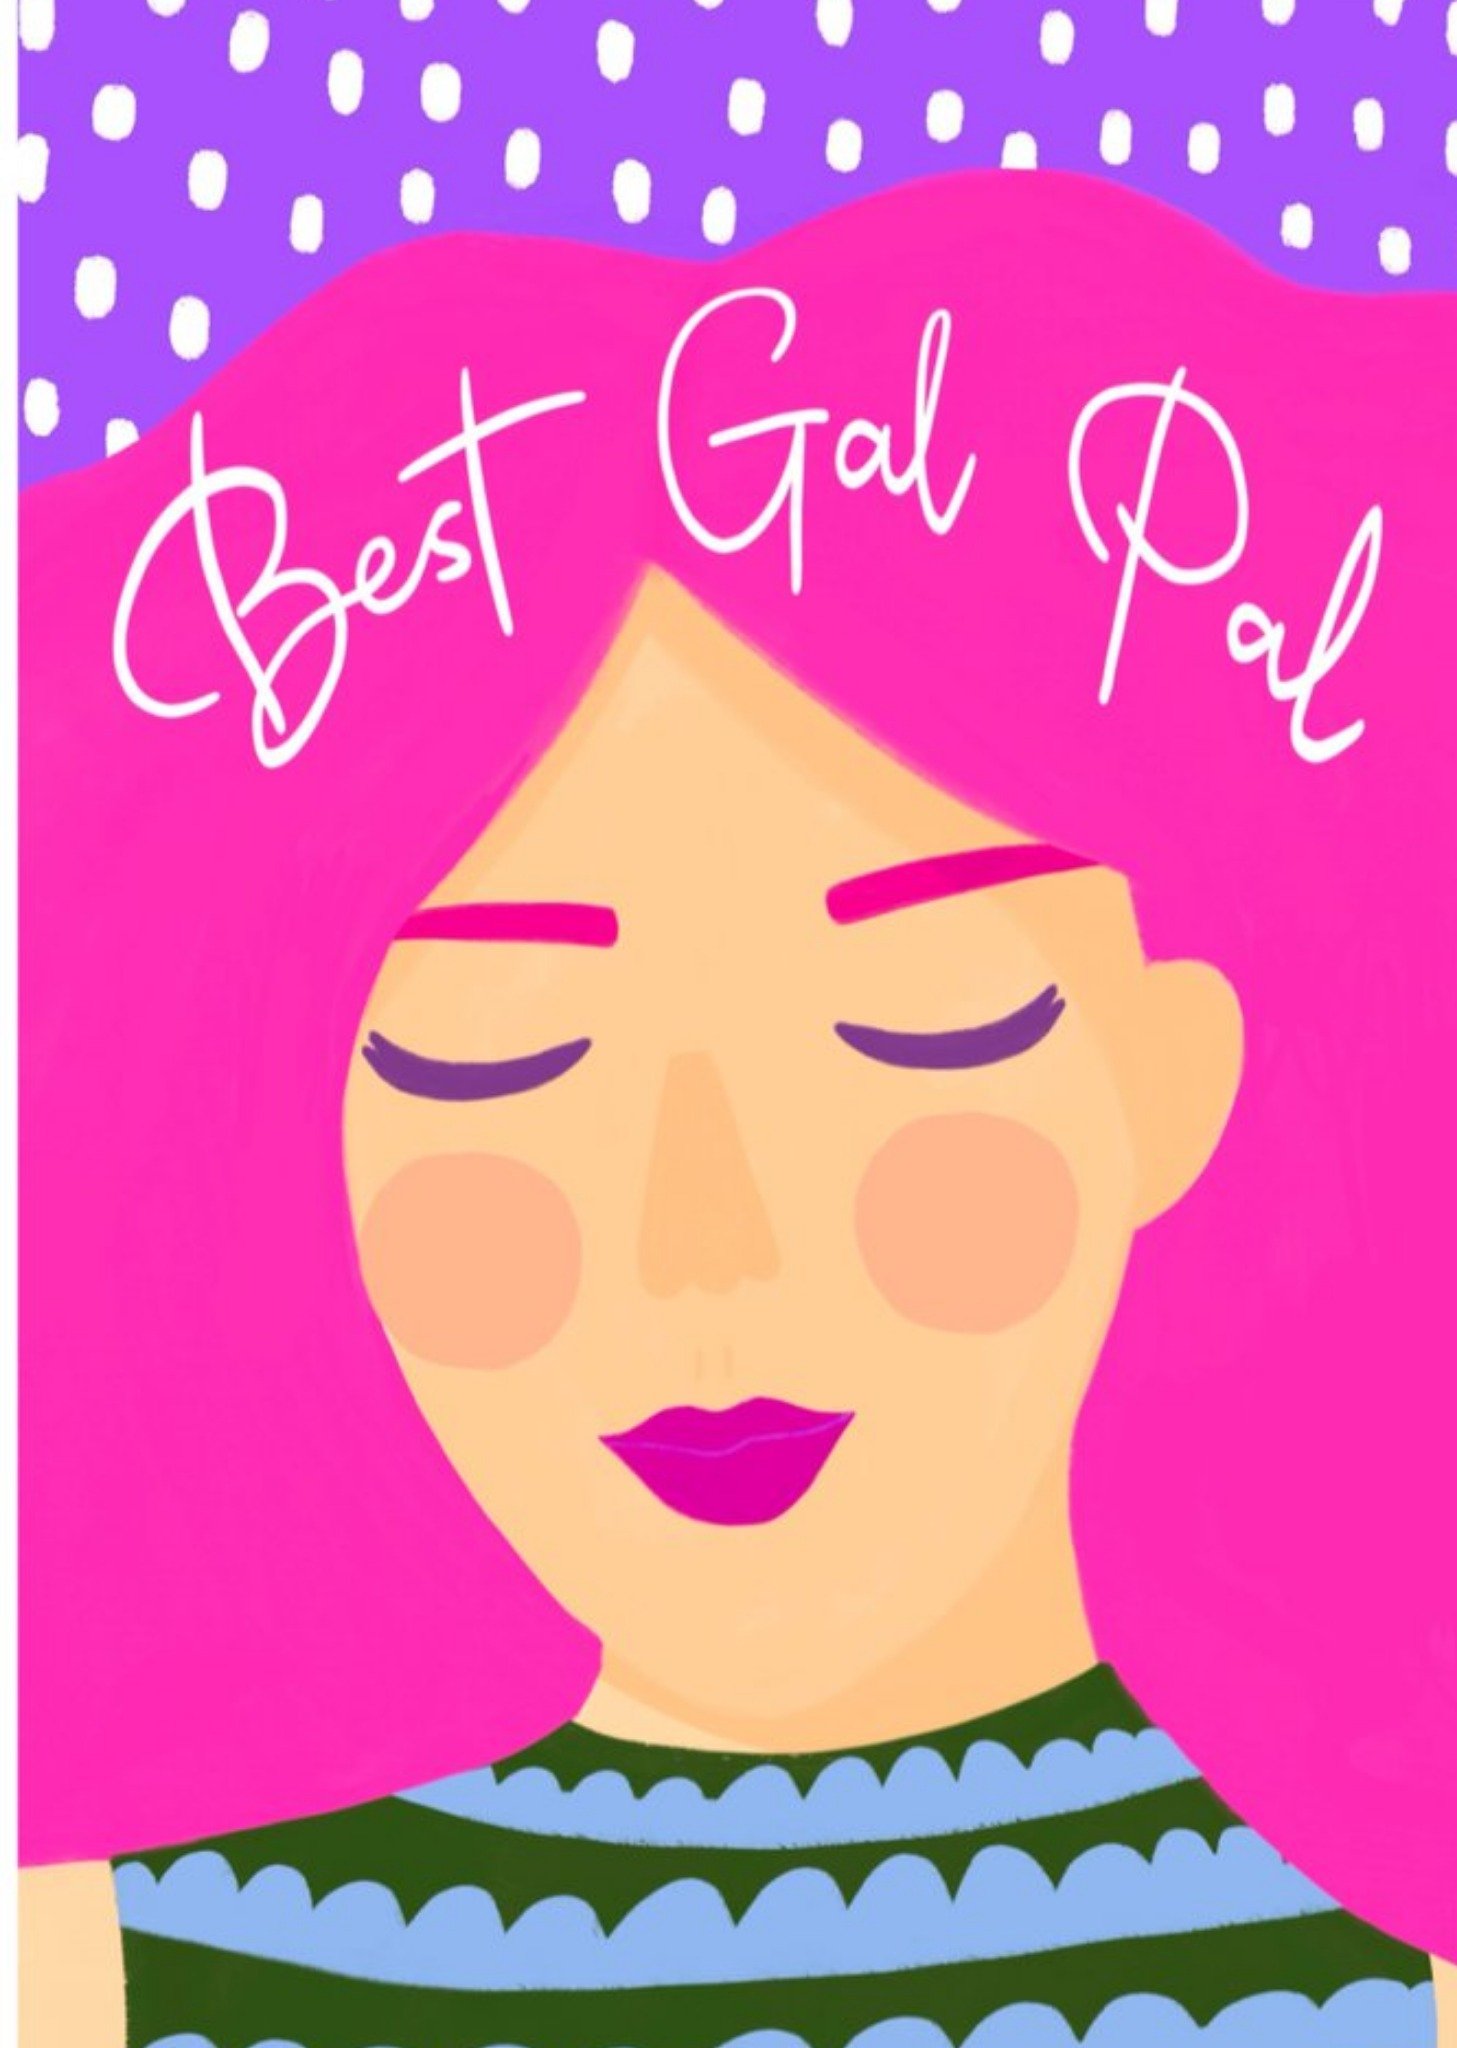 Moonpig Best Gal Pal Illustrated Woman Card Ecard